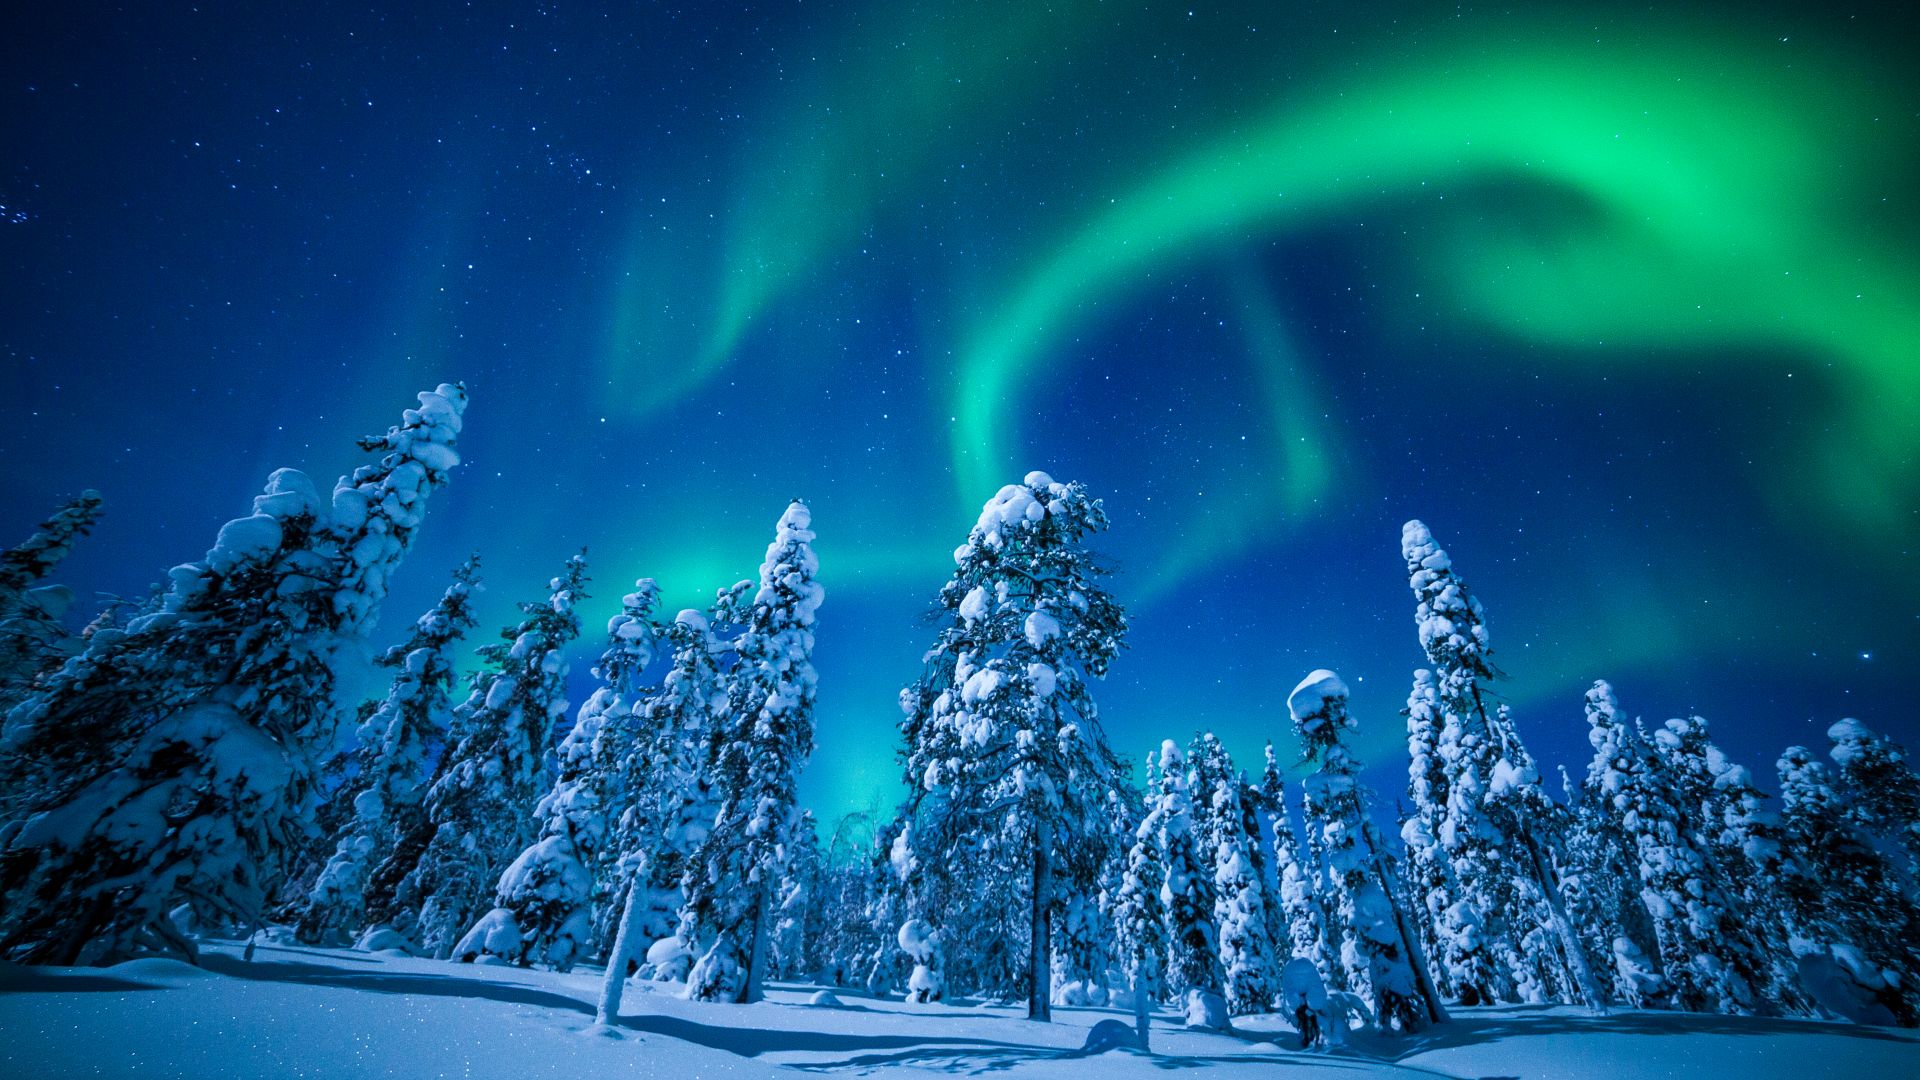 Лапландия, Финляндия, зима, северное сияние, Lapland, Finland, winter, snow, tree, night, northern lights, 5k (horizontal)